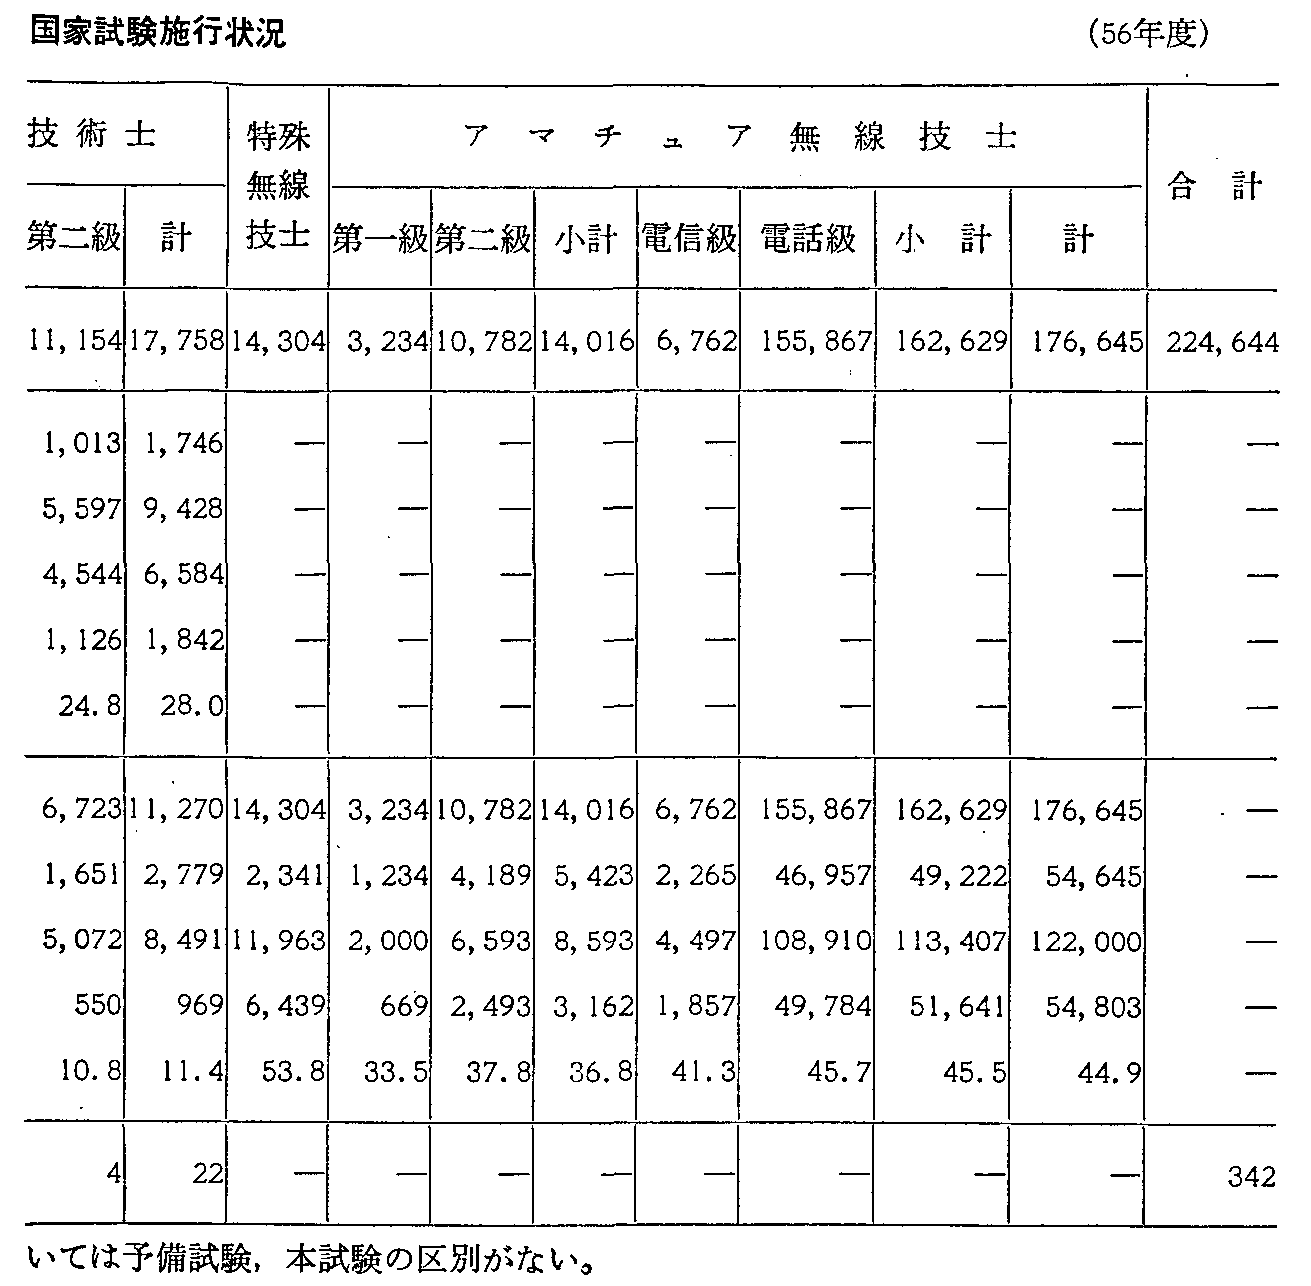 2-6-21\ ]ҍƎ{s(56Nx)(2)